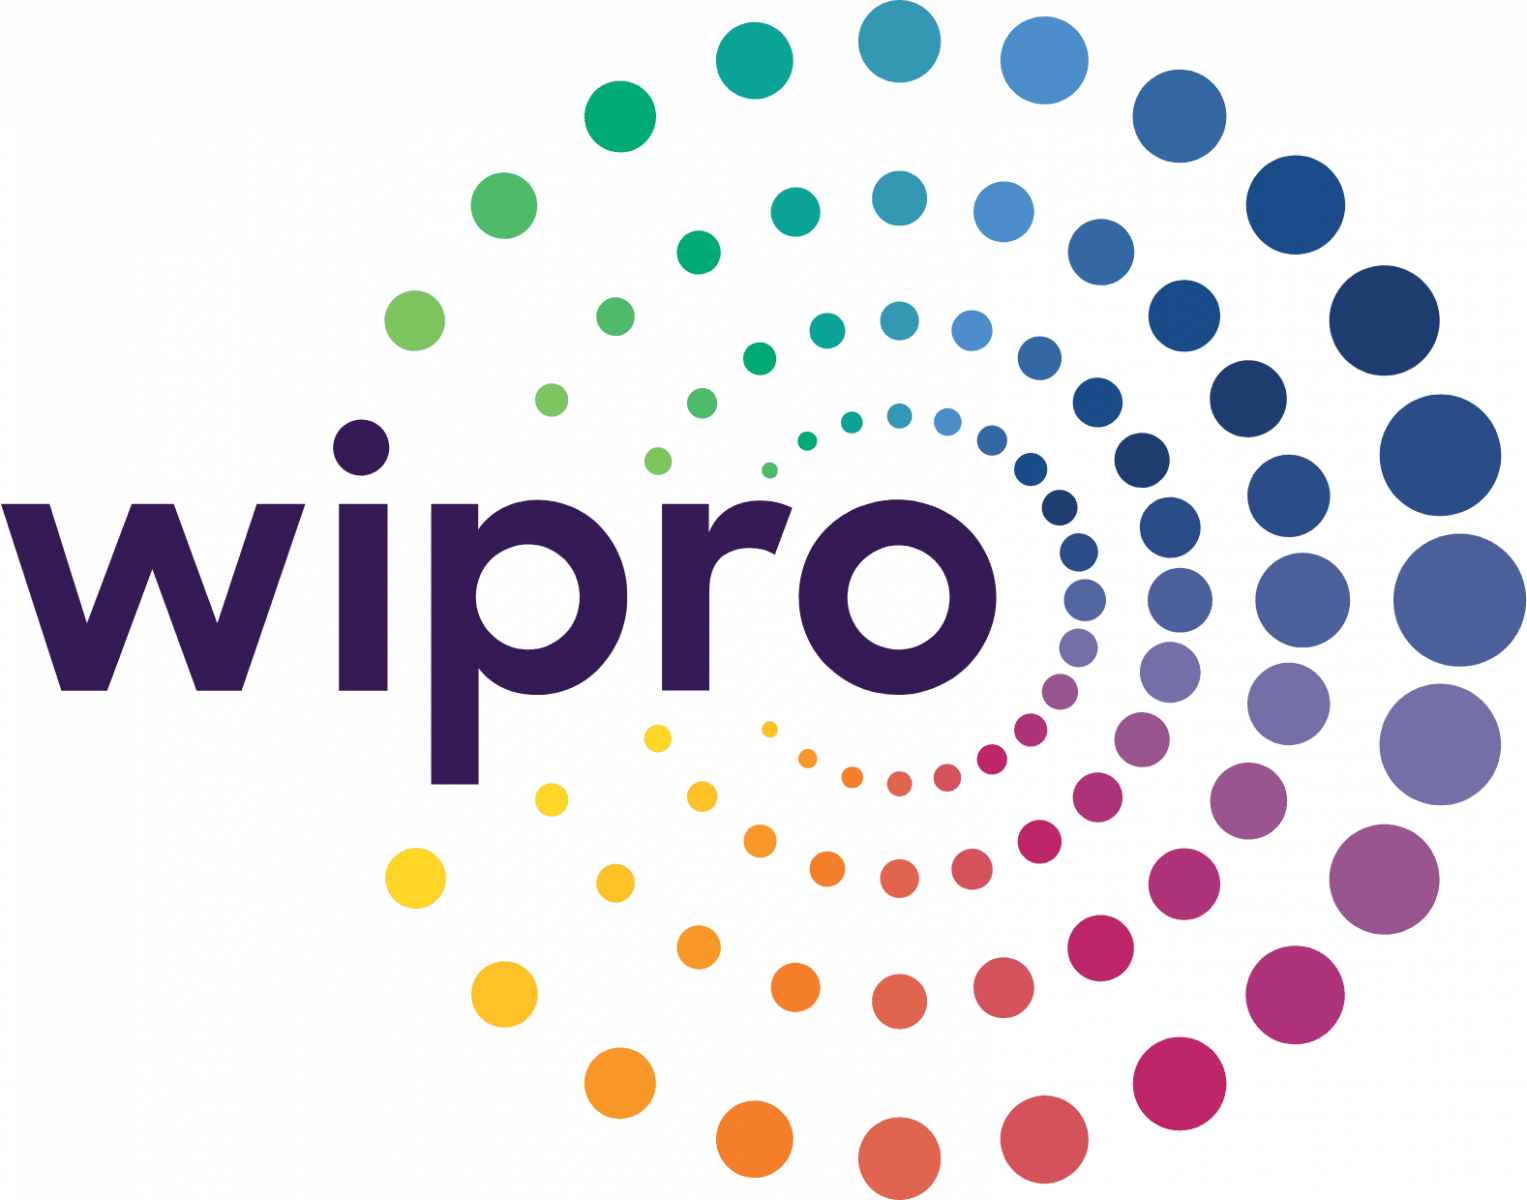 Wipro it companies in Mumbai